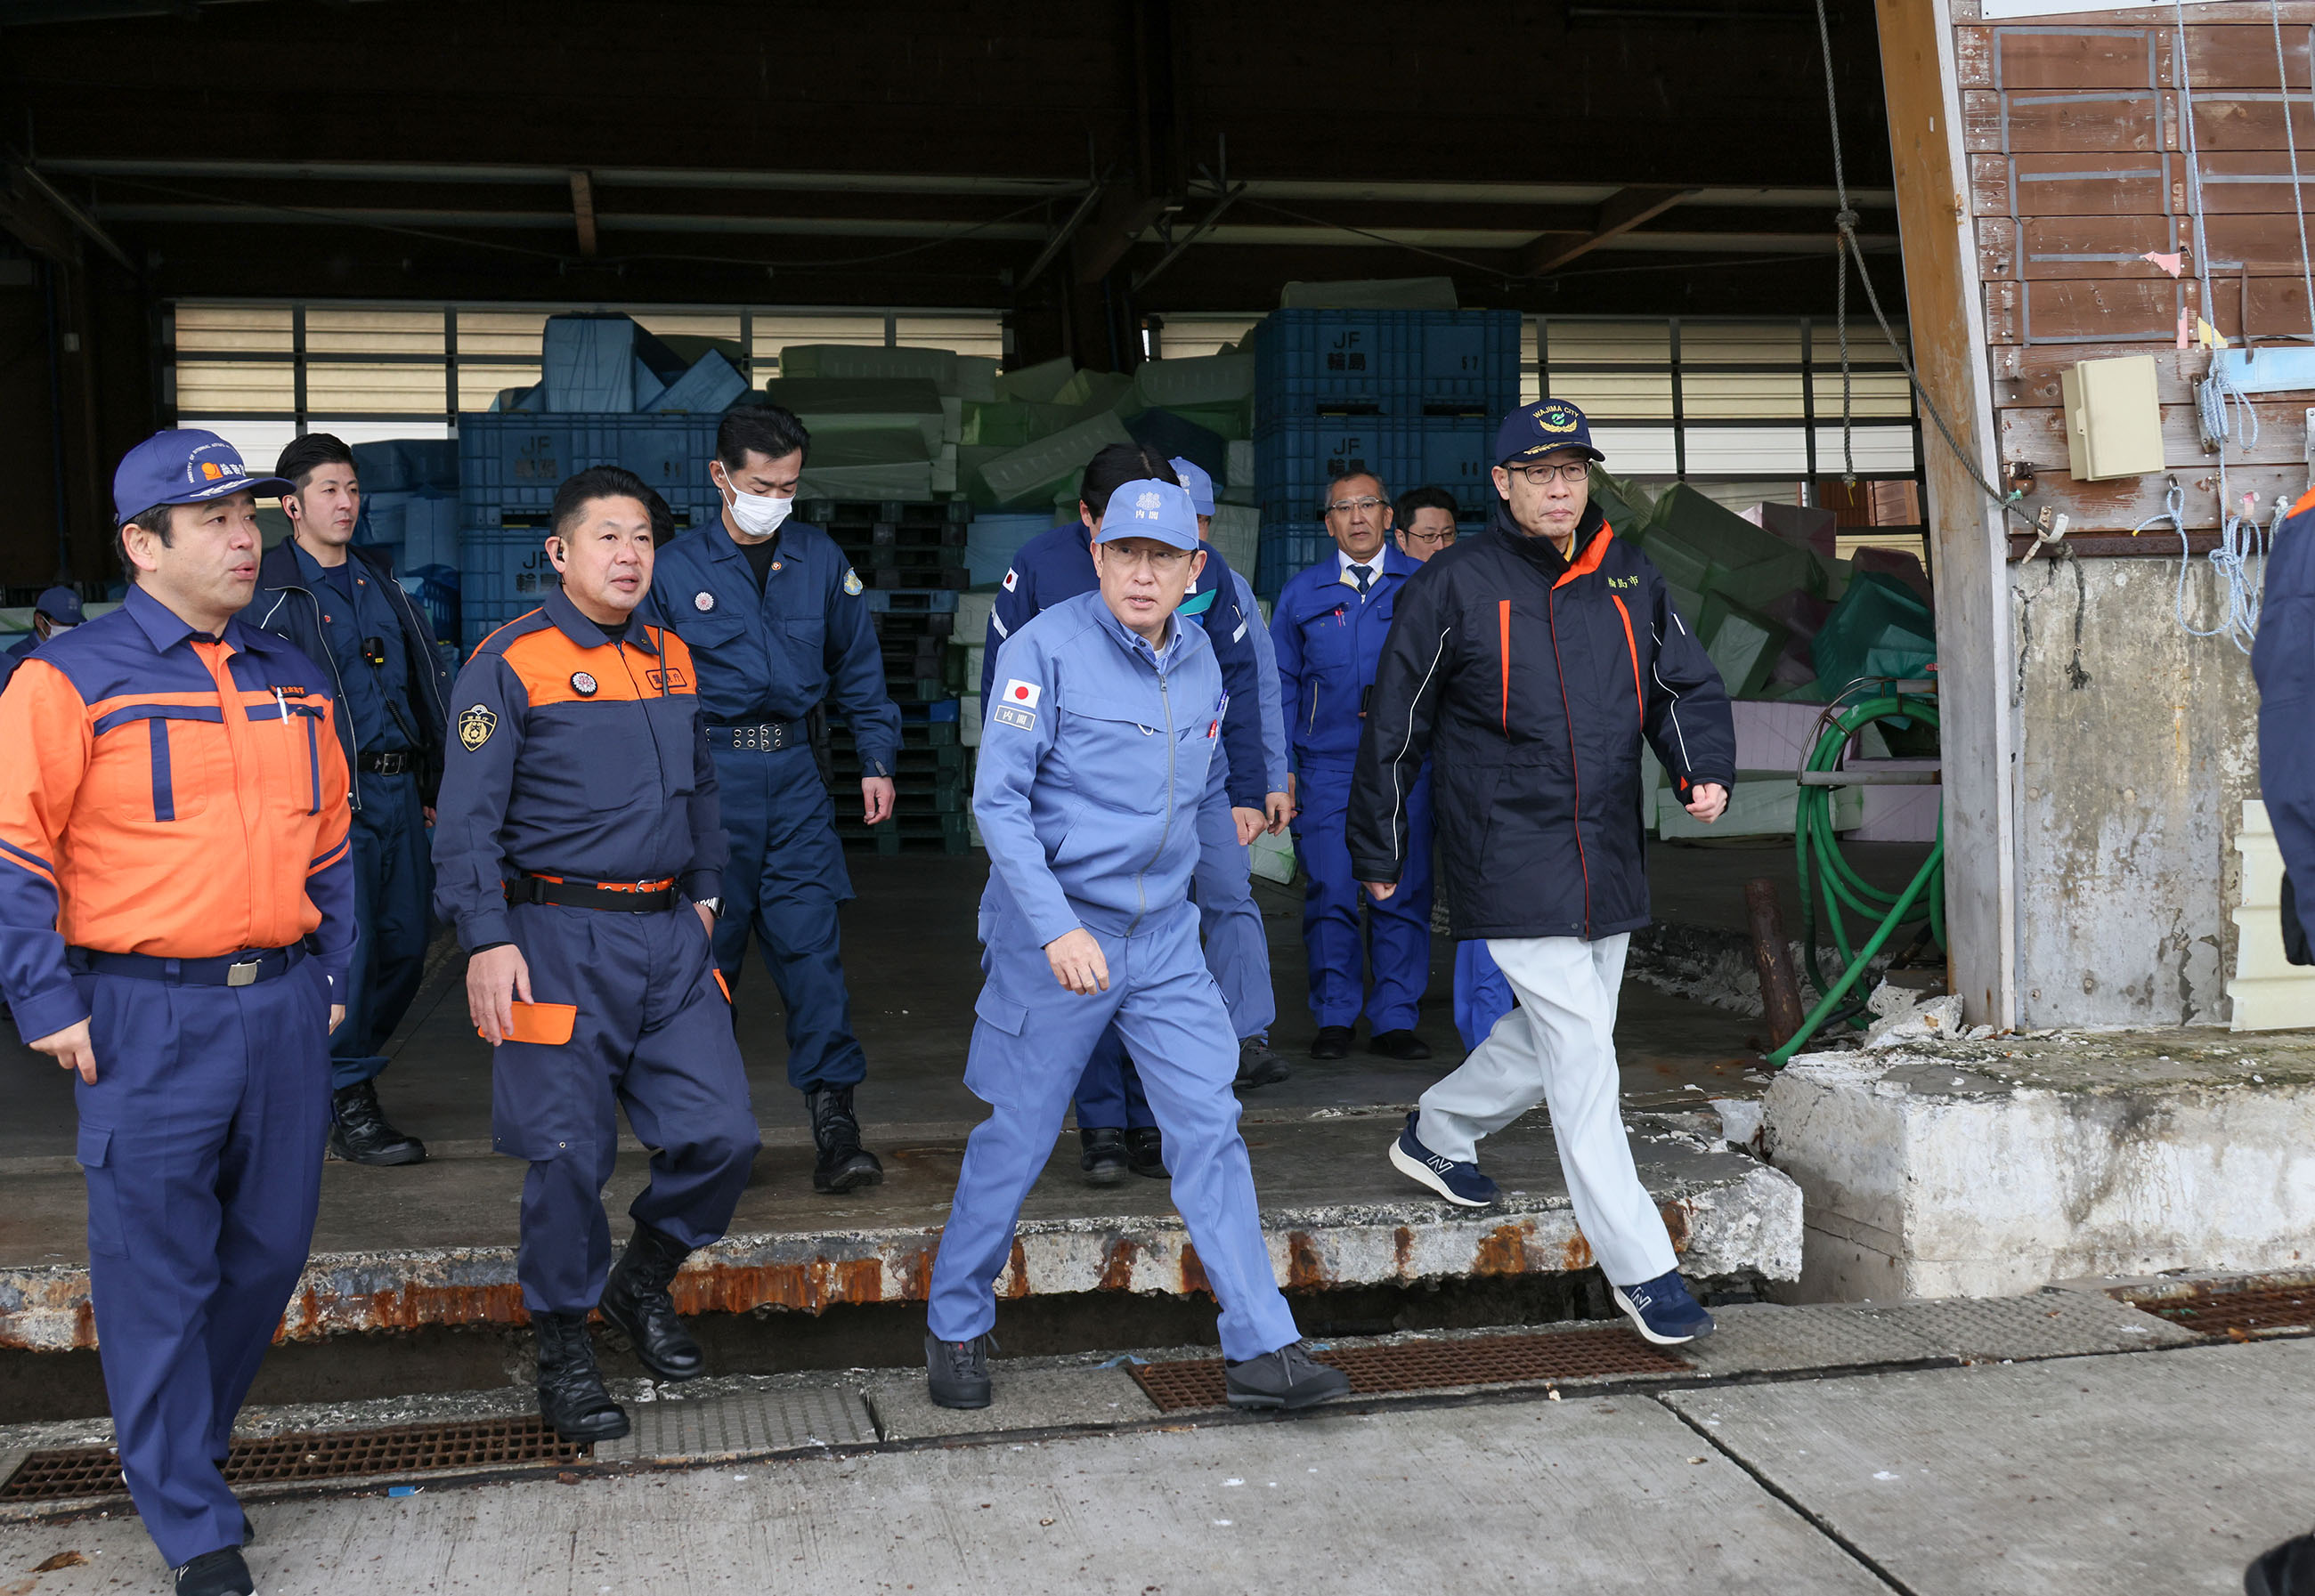 Prime Minister Kishida visiting the Port of Wajima (3)